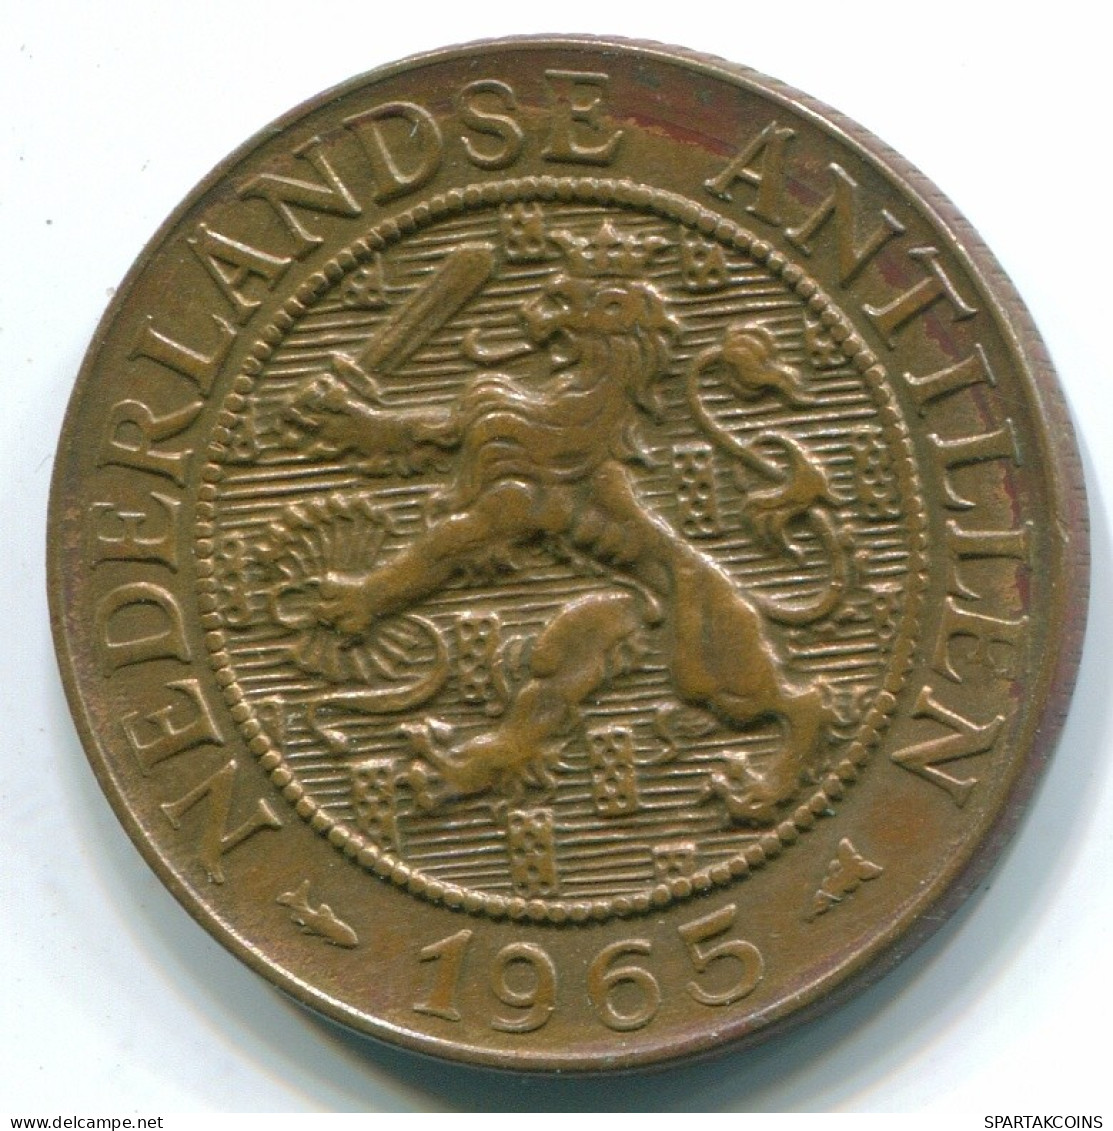 2 1/2 CENT 1965 CURACAO Netherlands Bronze Colonial Coin #S10206.U.A - Curaçao